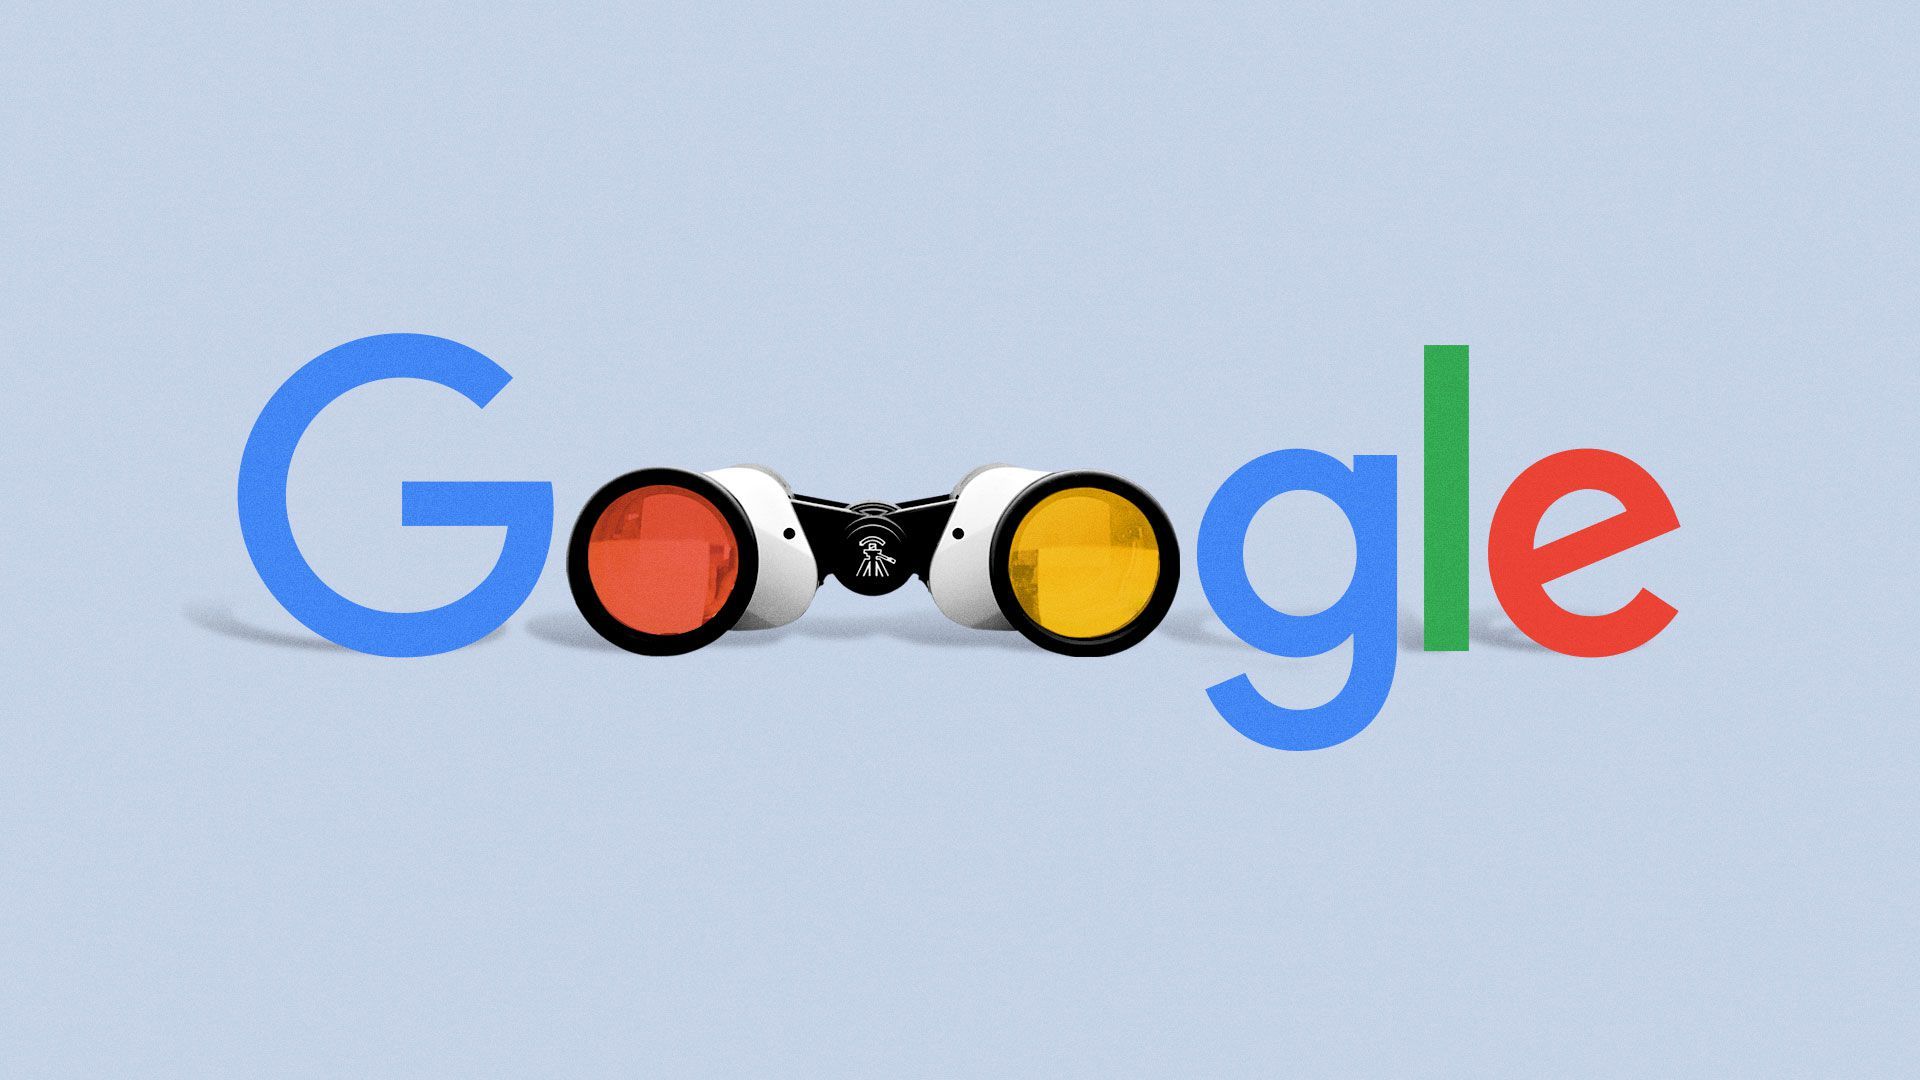 Illustration of Google logo with binoculars for the “O O”